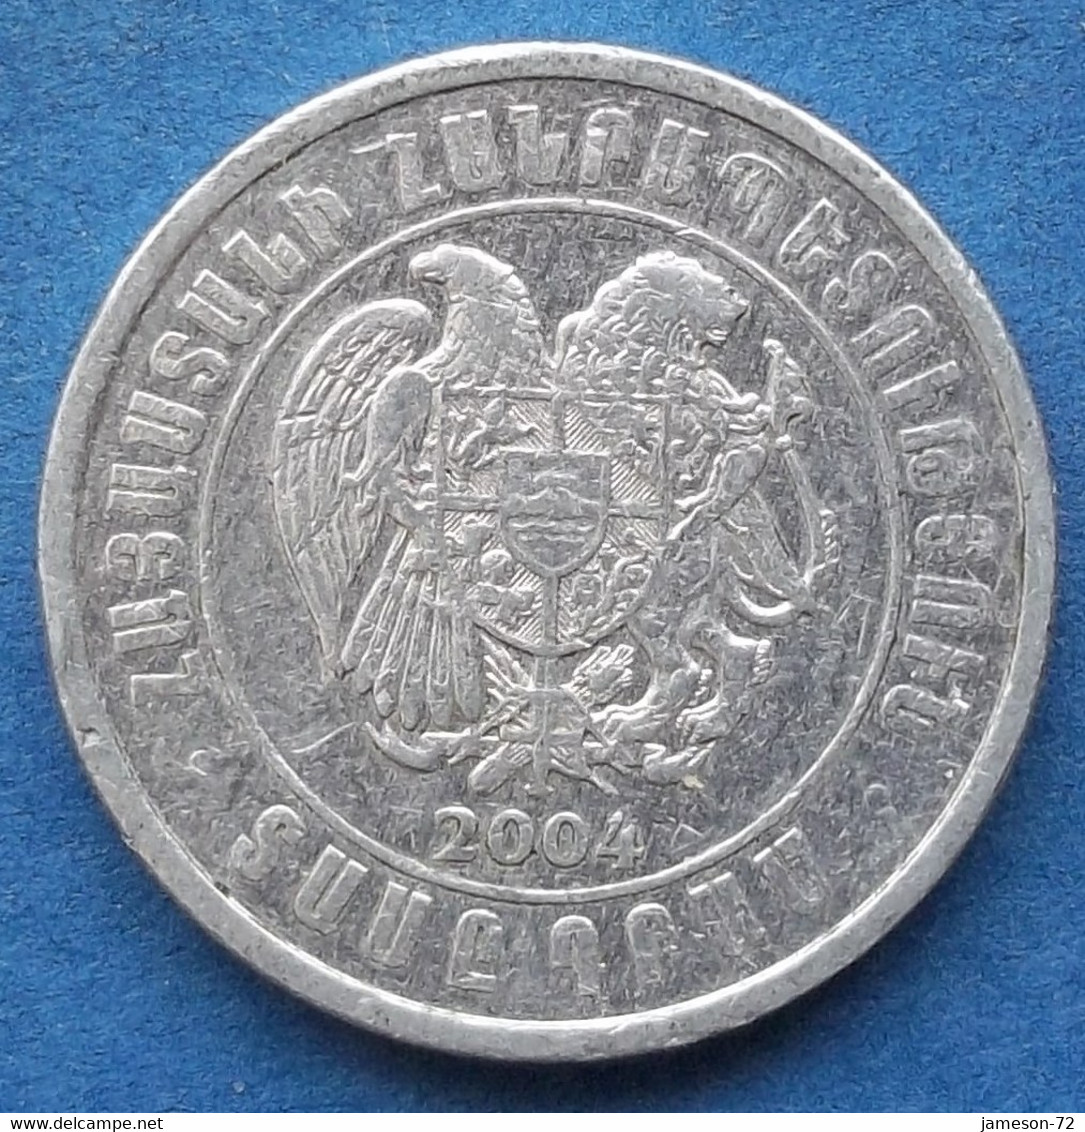 ARMENIA - 10 Dram 2004 KM# 112 Independent Republic (1991) - Edelweiss Coins - Armenia